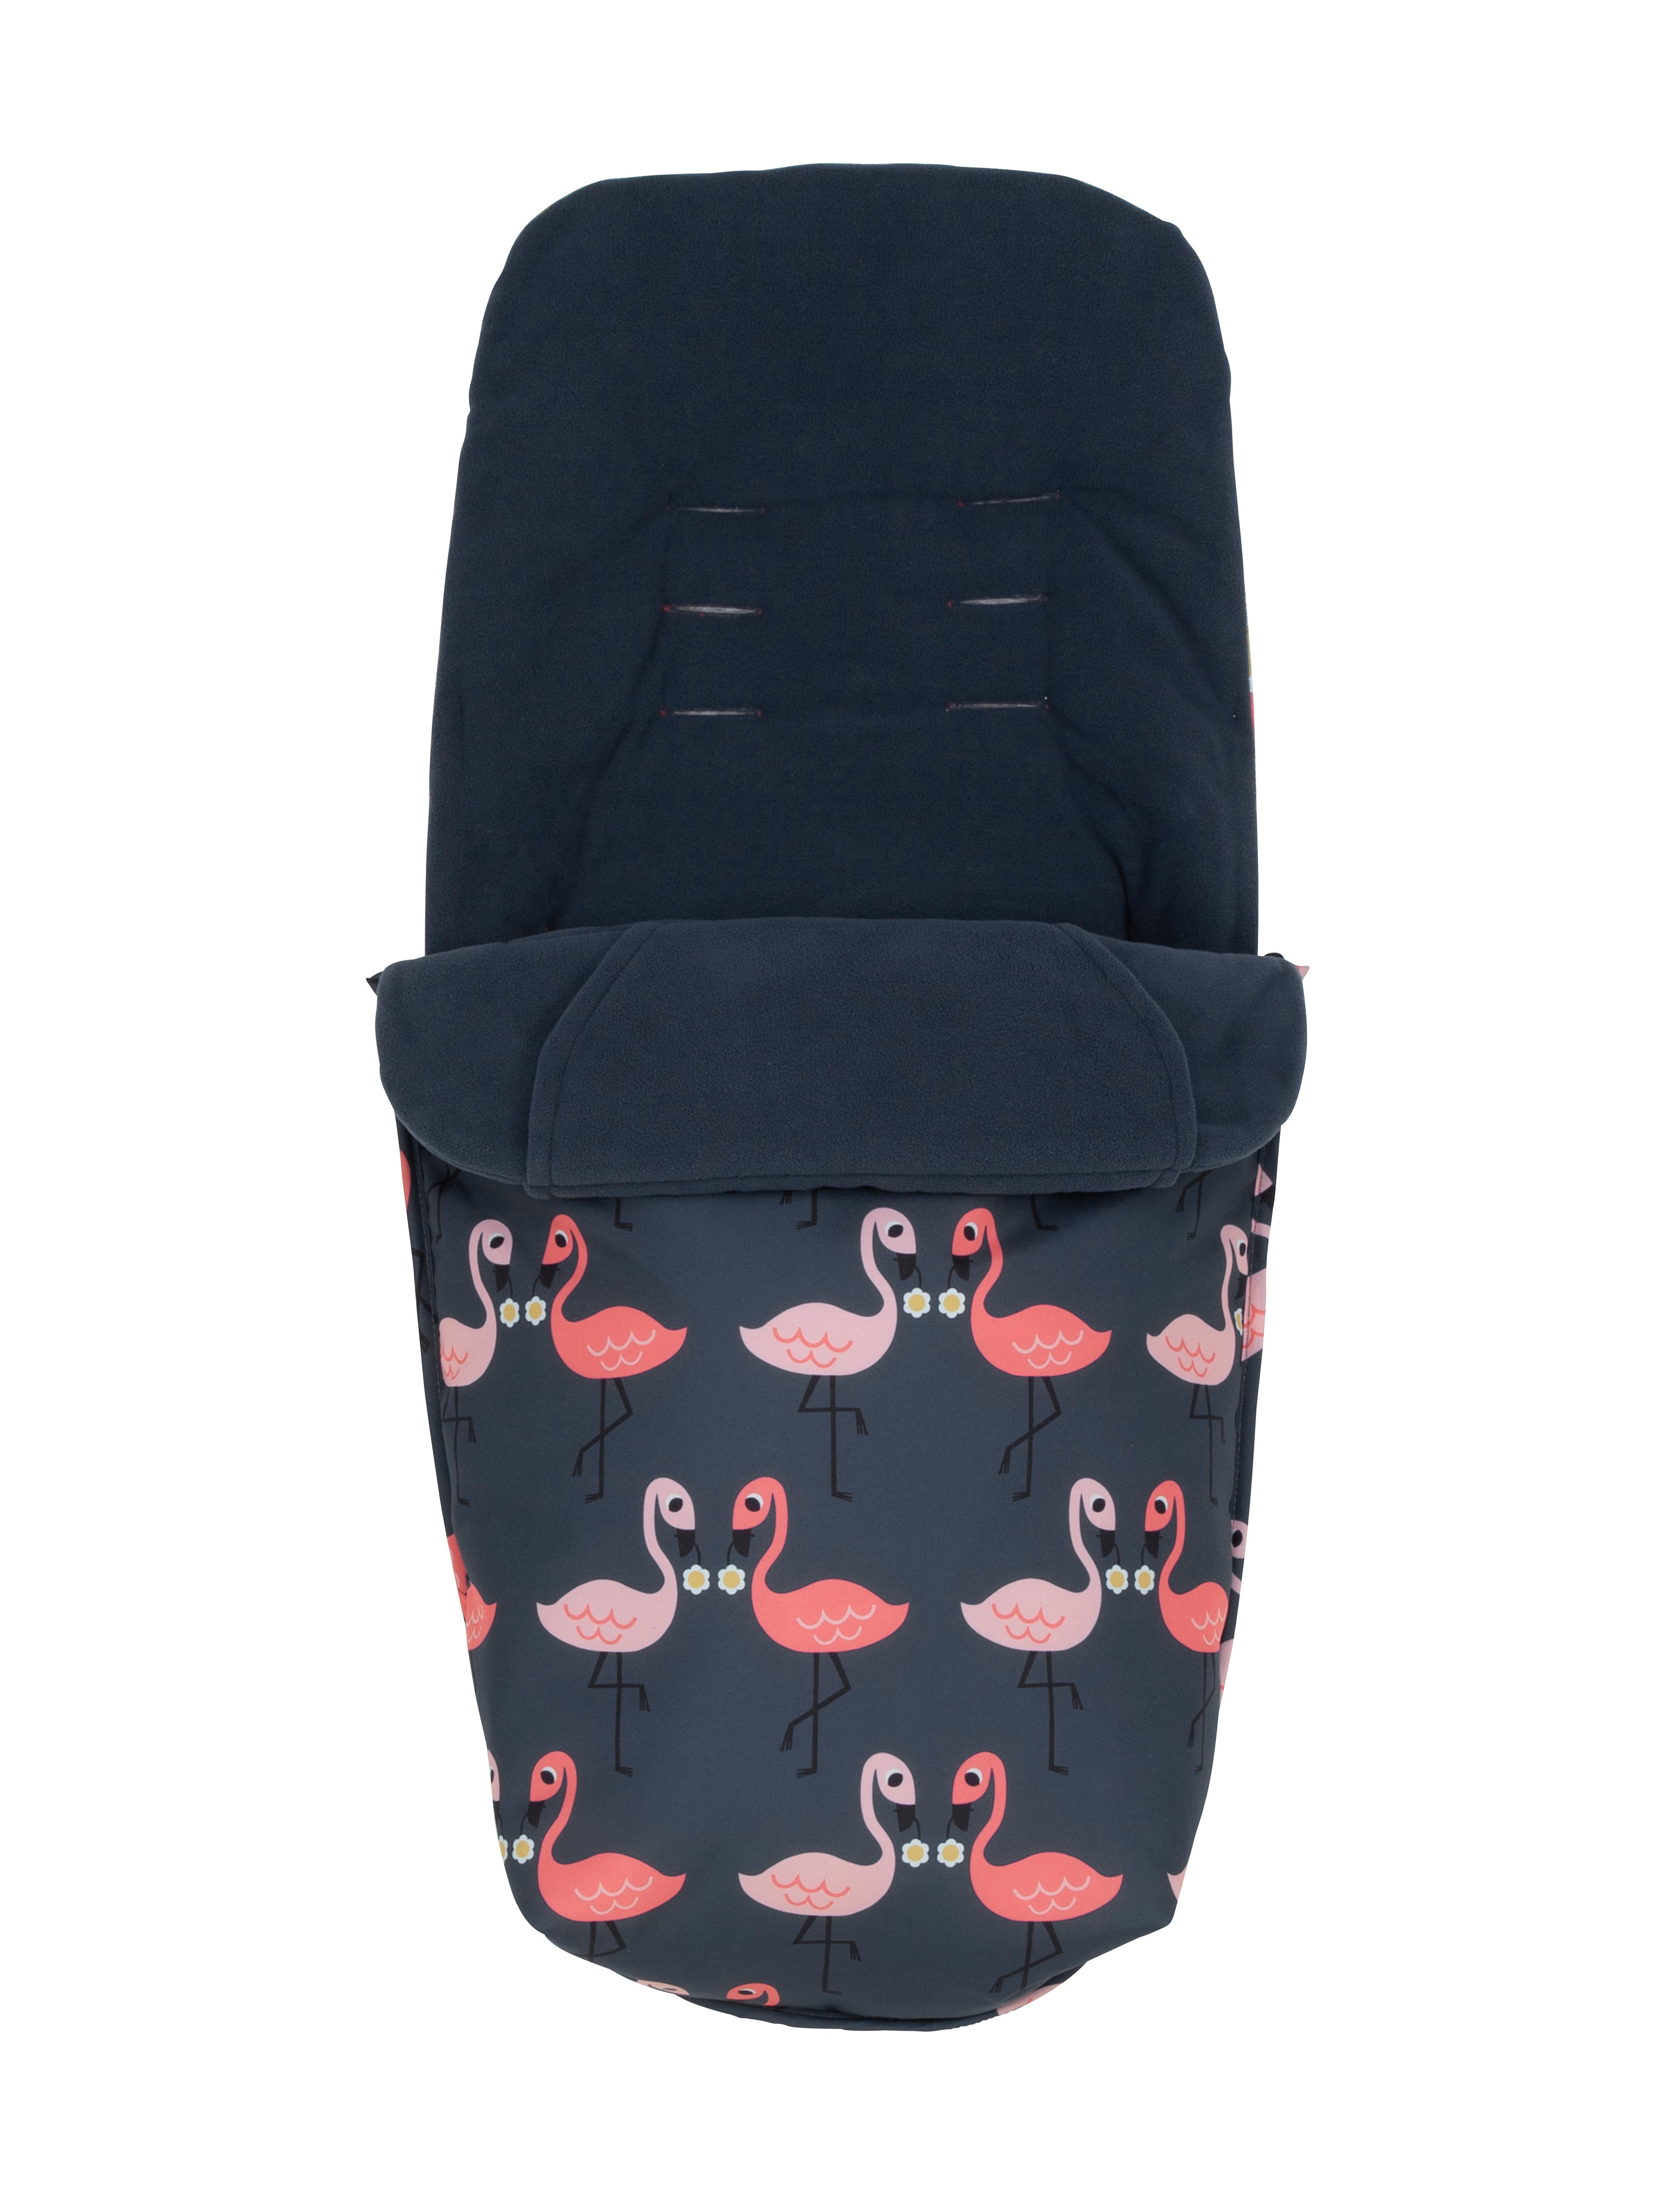 Giggle accessoireset - mooie flamingo